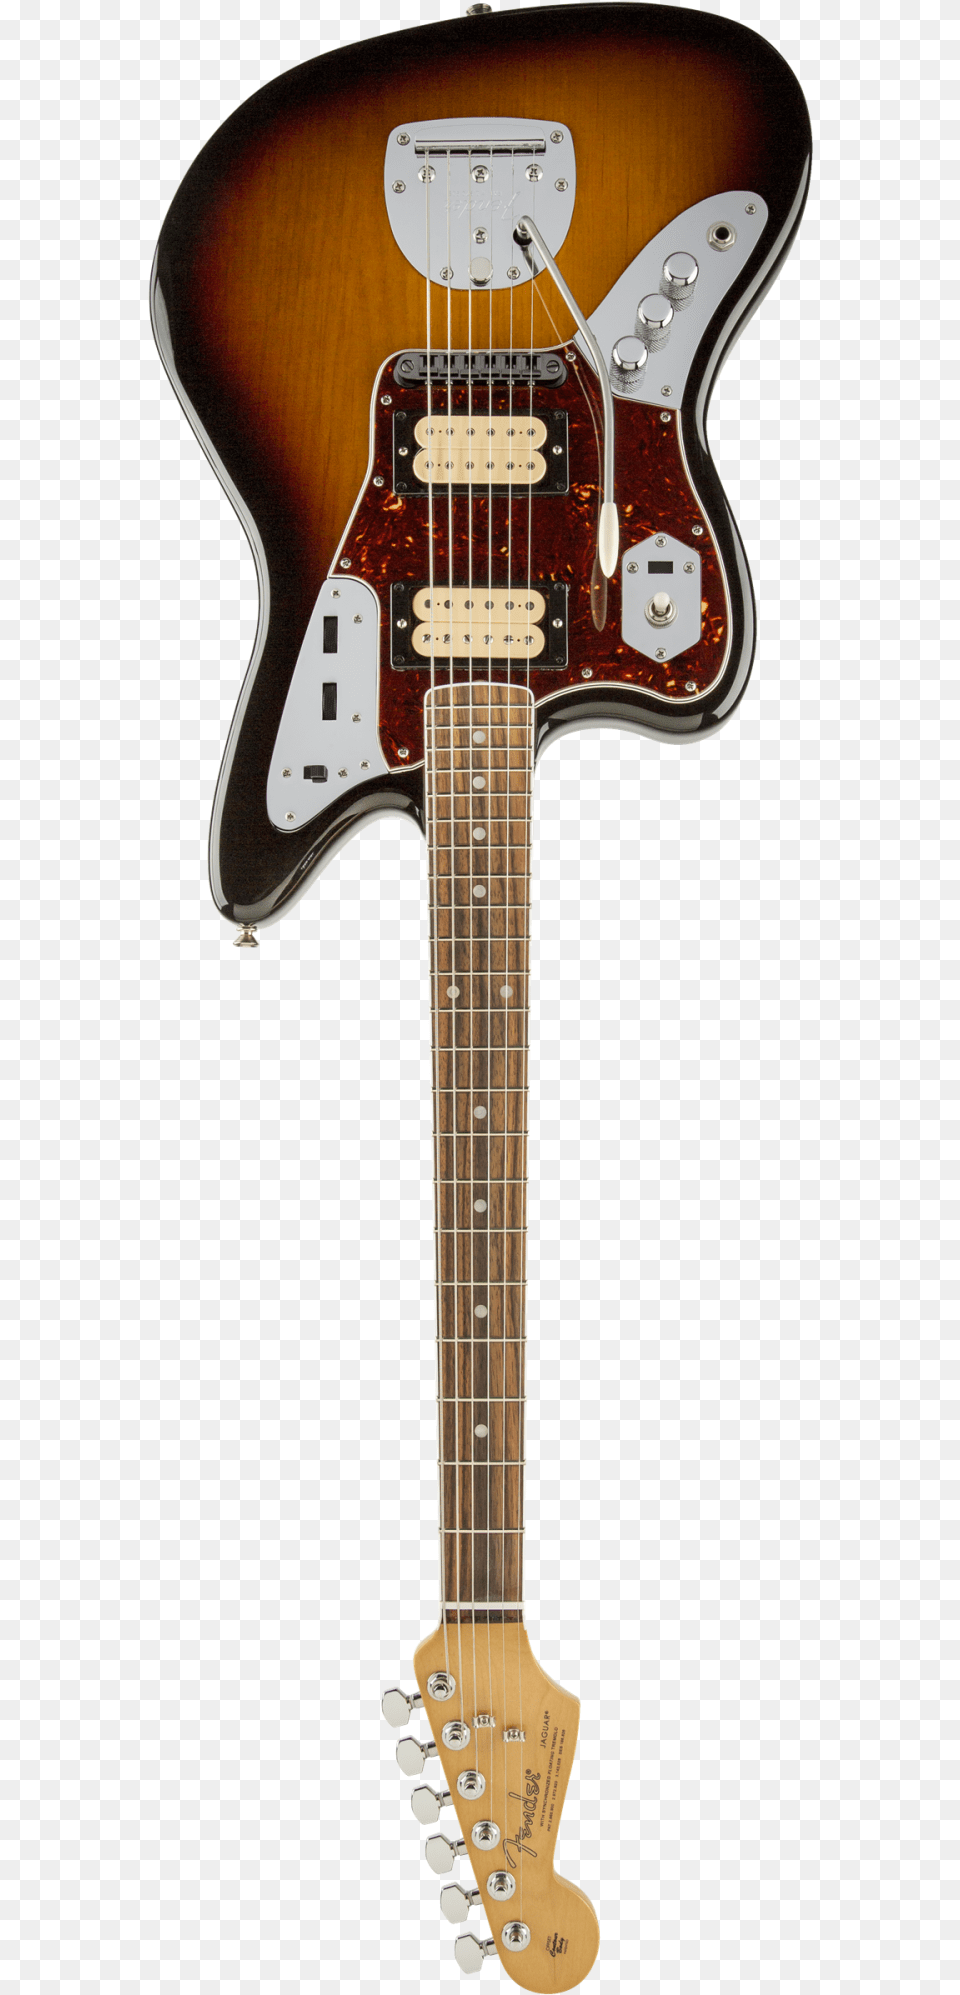 Fender Jaguar Kurt Cobain, Guitar, Musical Instrument, Electric Guitar, Bass Guitar Free Png Download